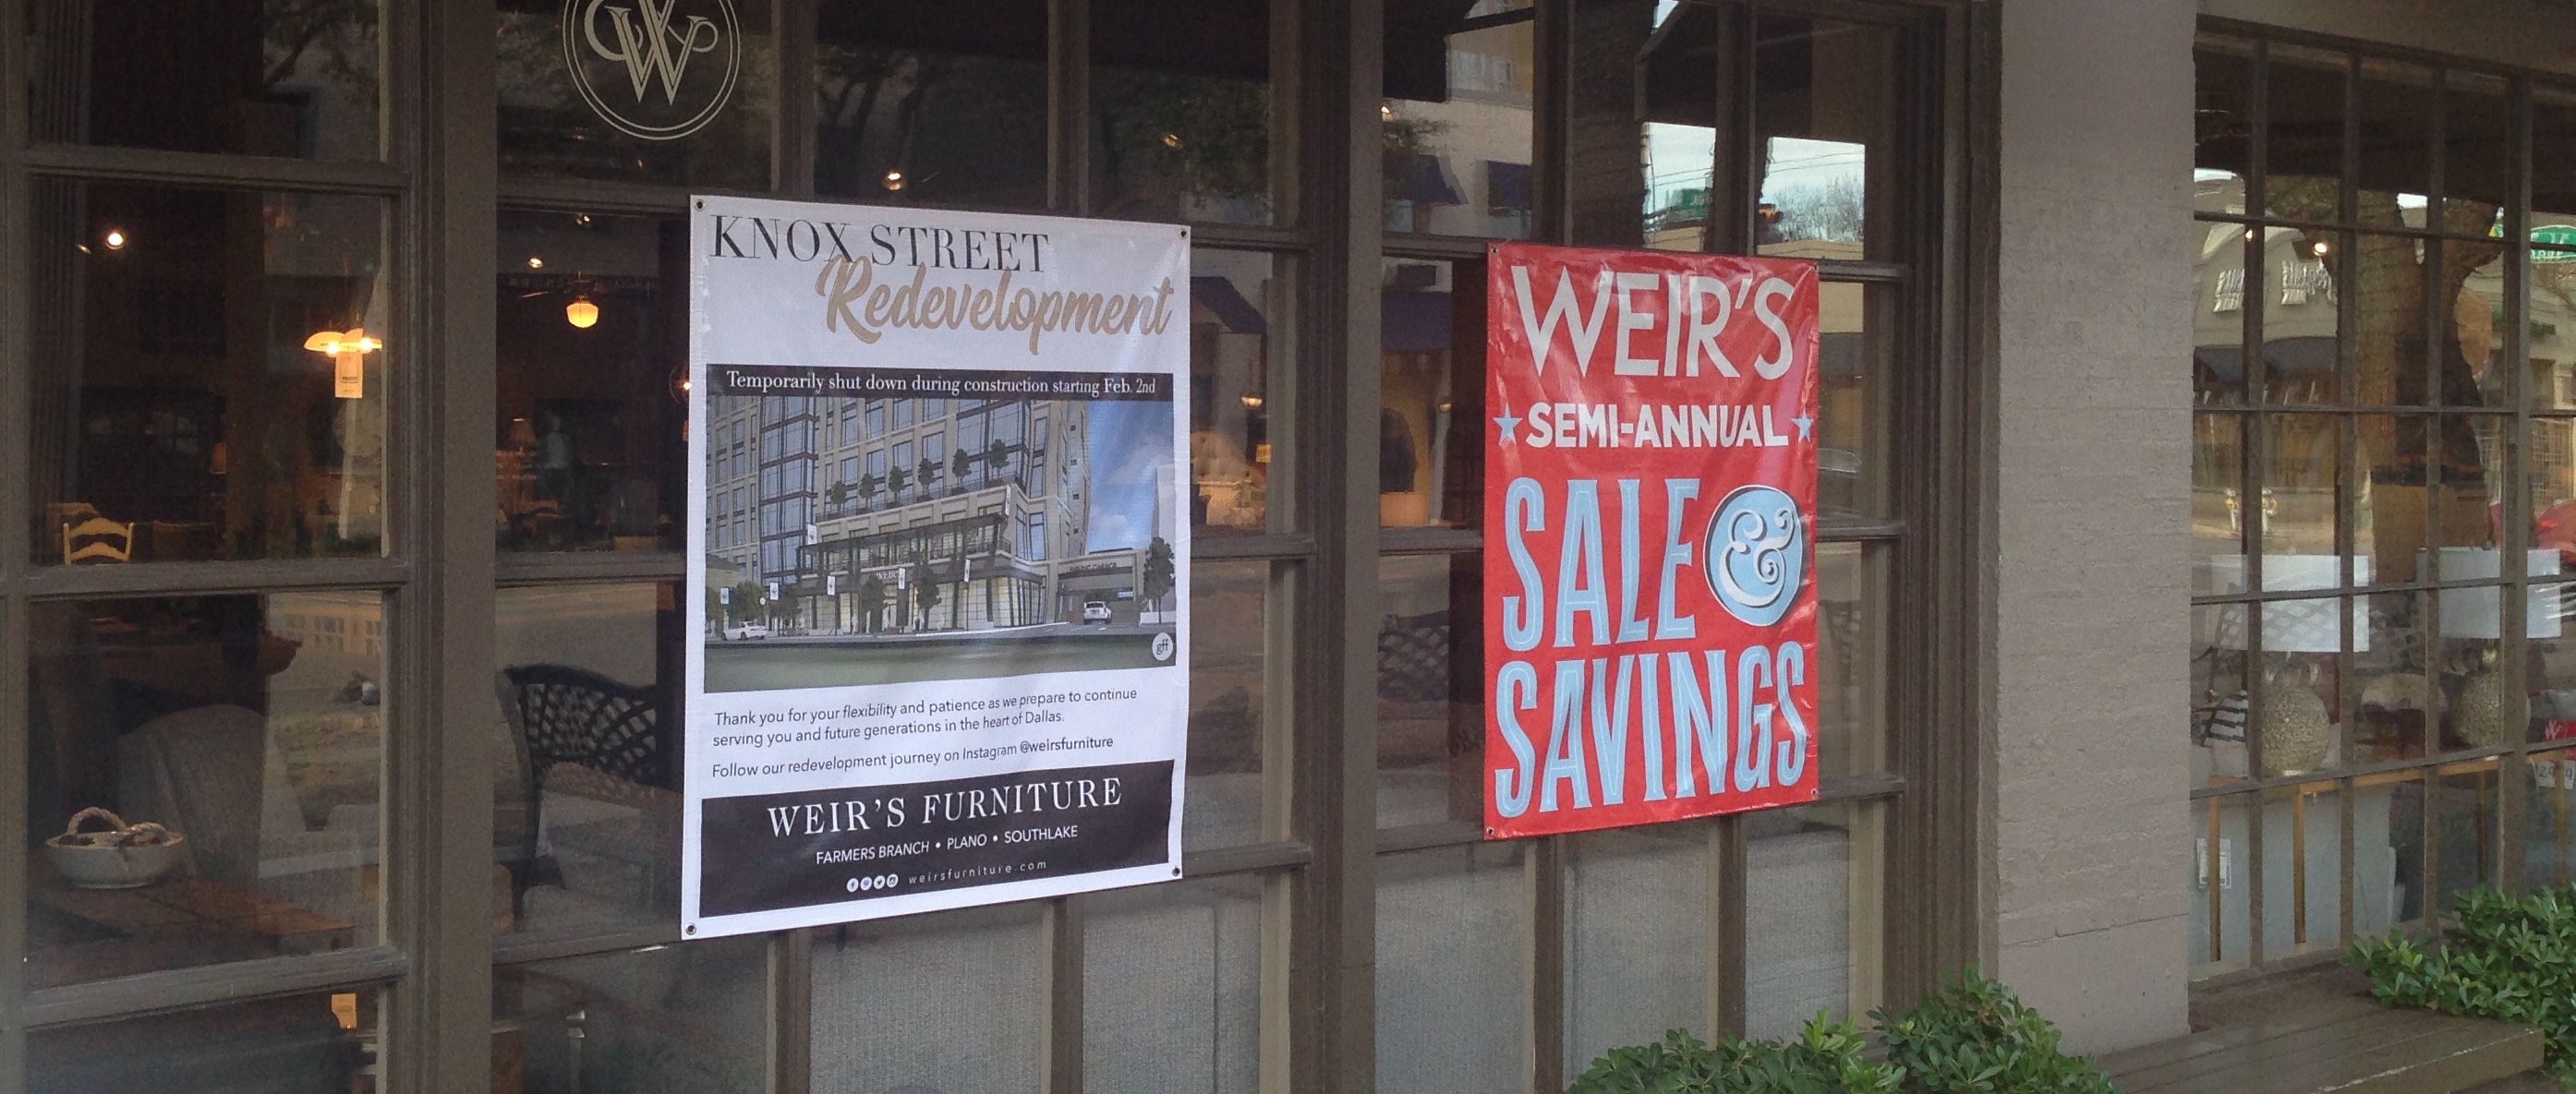 Knox Street Landmark Weir S Furniture Store Is Closing Soon After